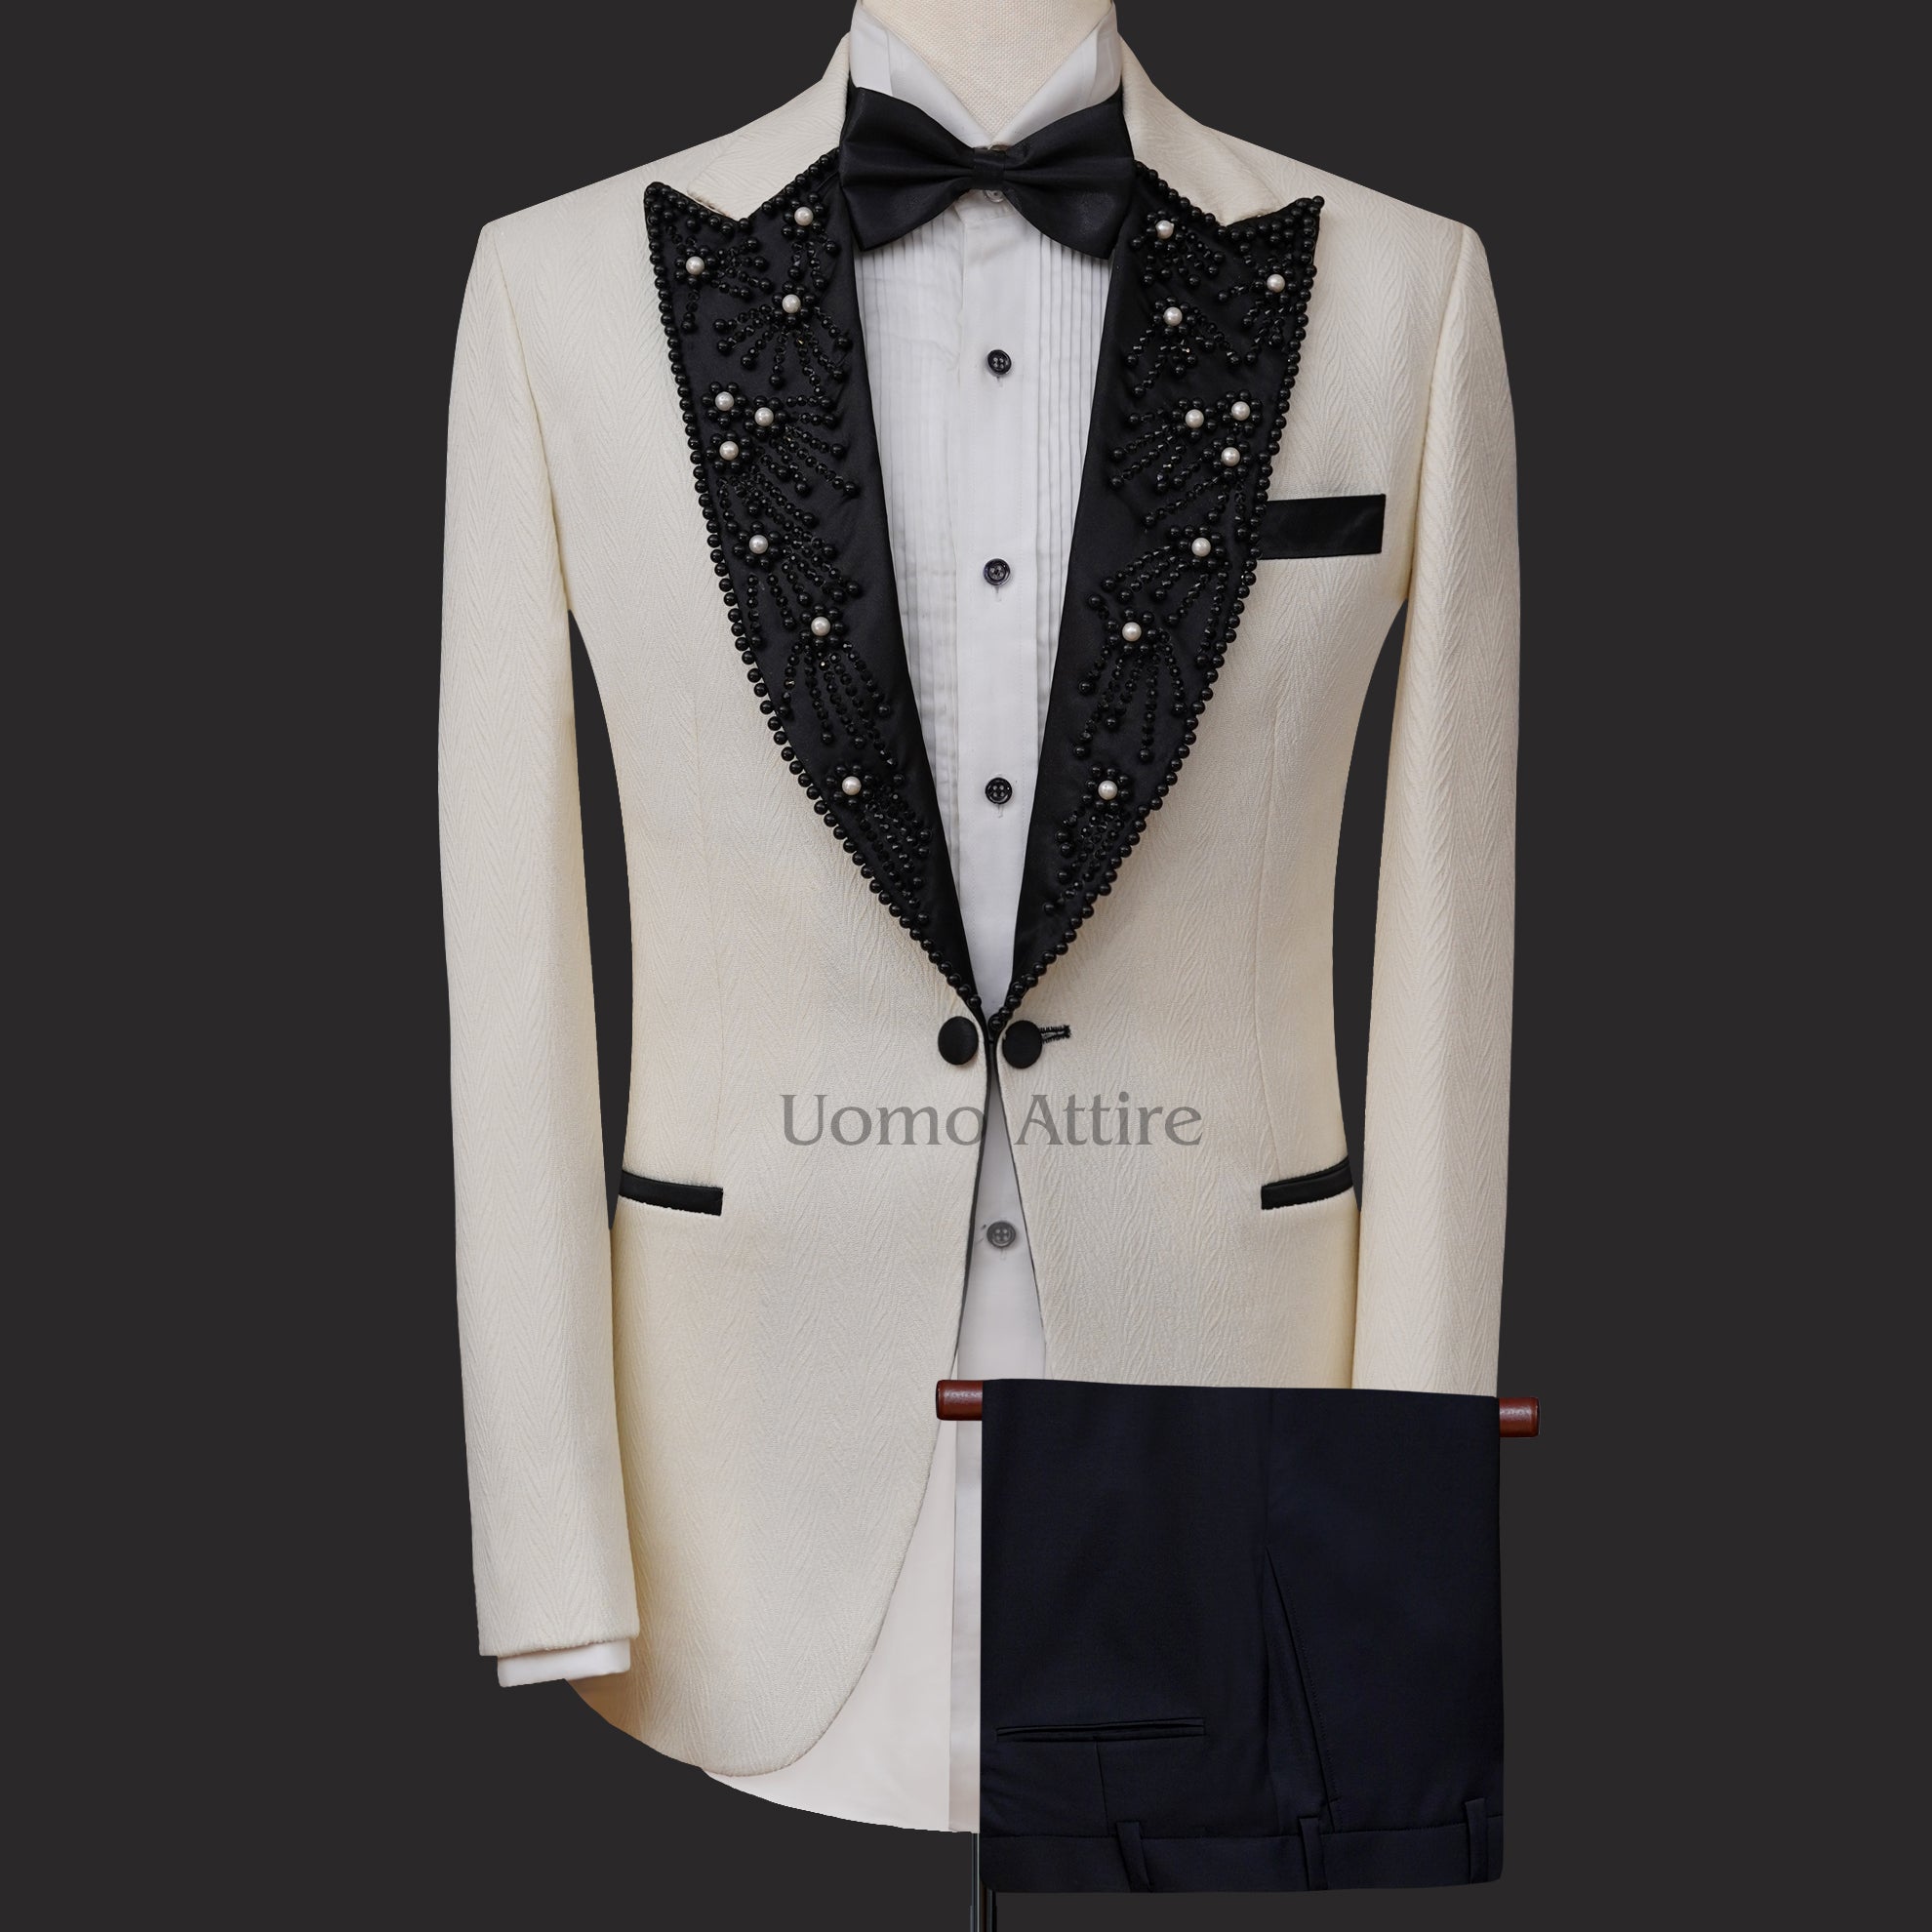 Wedding suit for men | White wedding suit for men with embellished black peak lapel | Wedding Suit